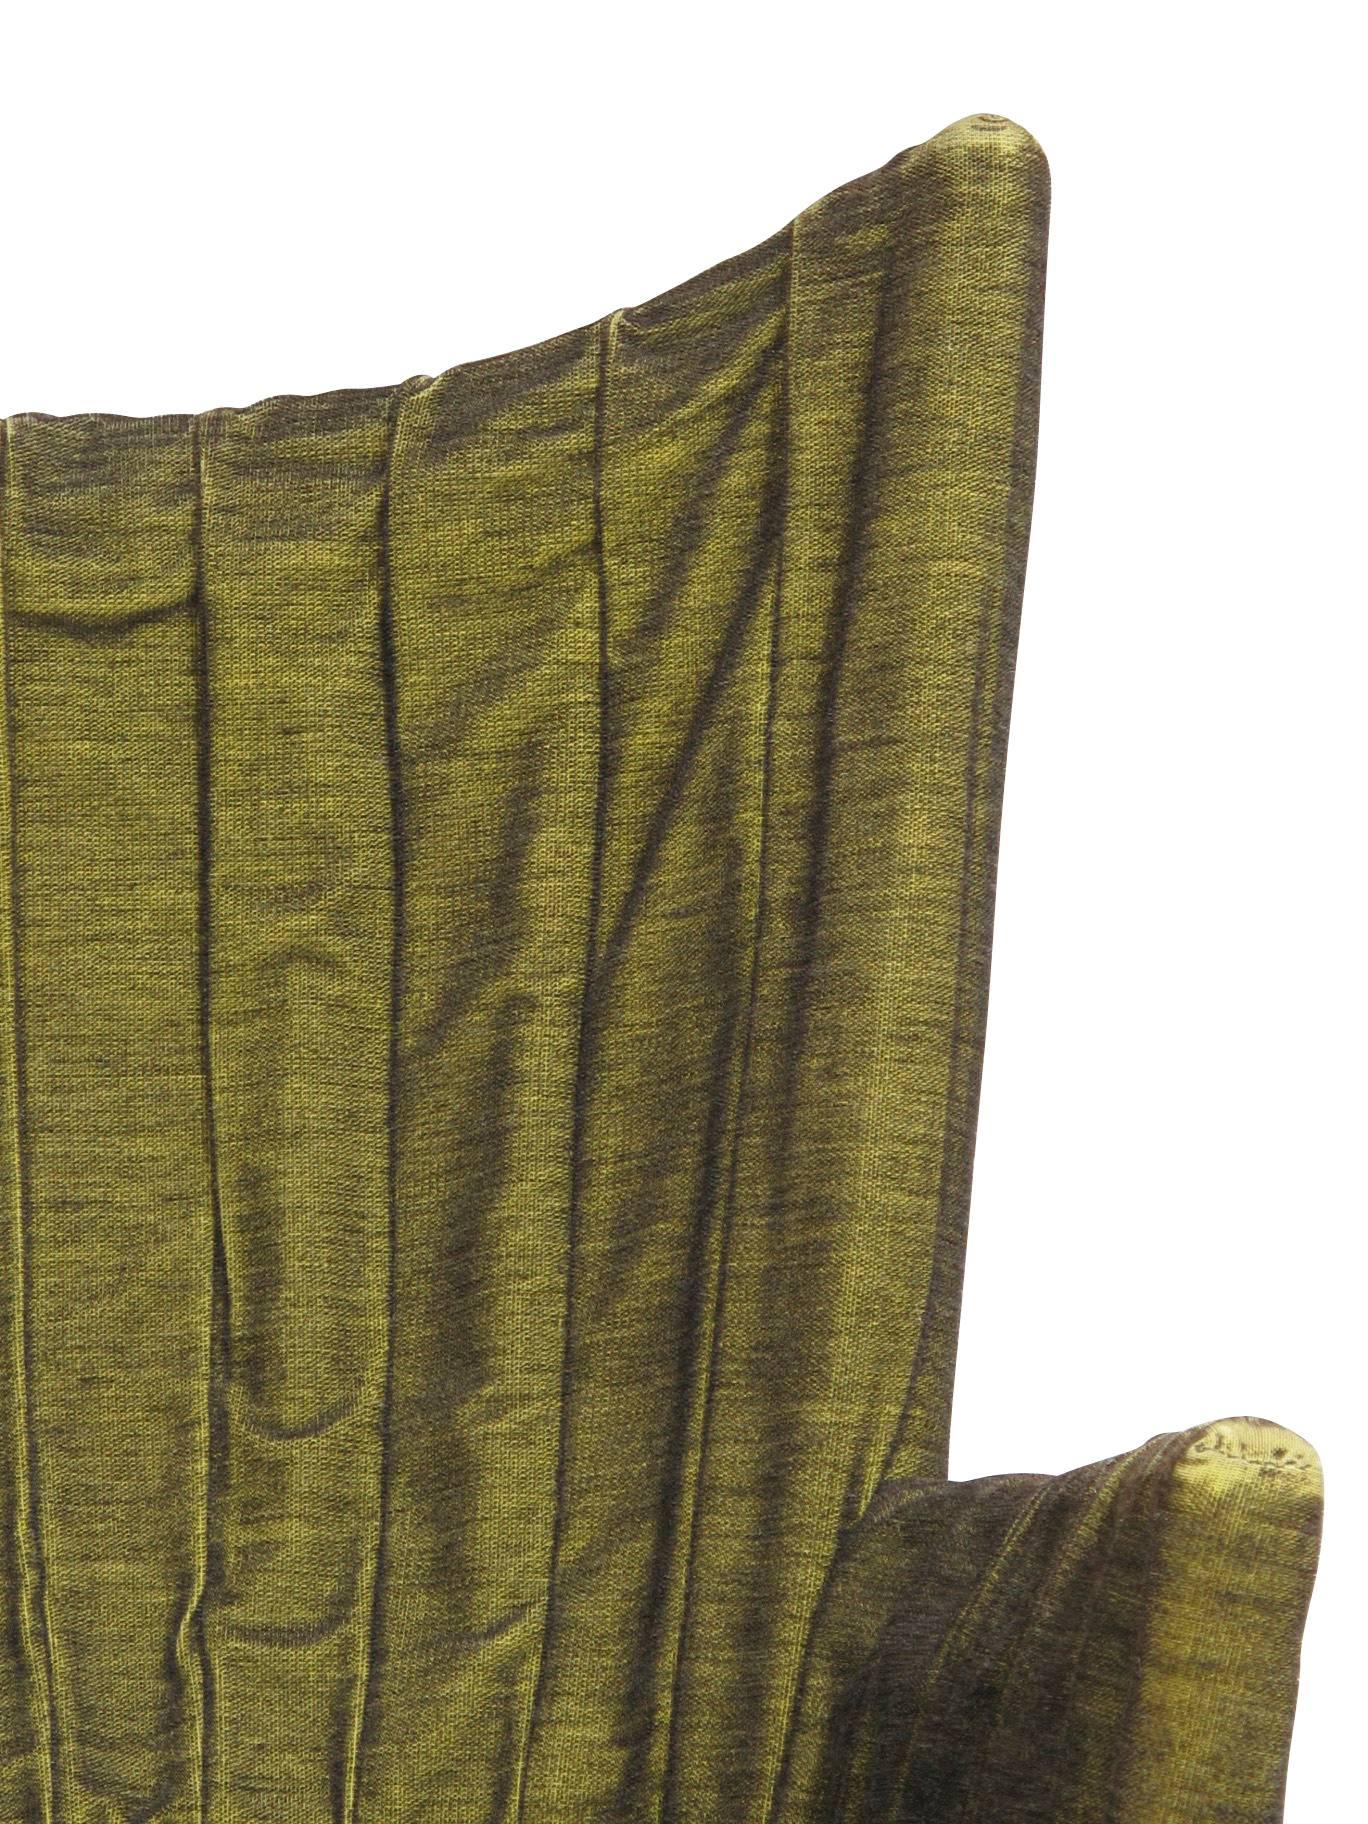 Italian Settee & Pair of Lounge Chairs - Original Horsehair Fabric on Brass 2